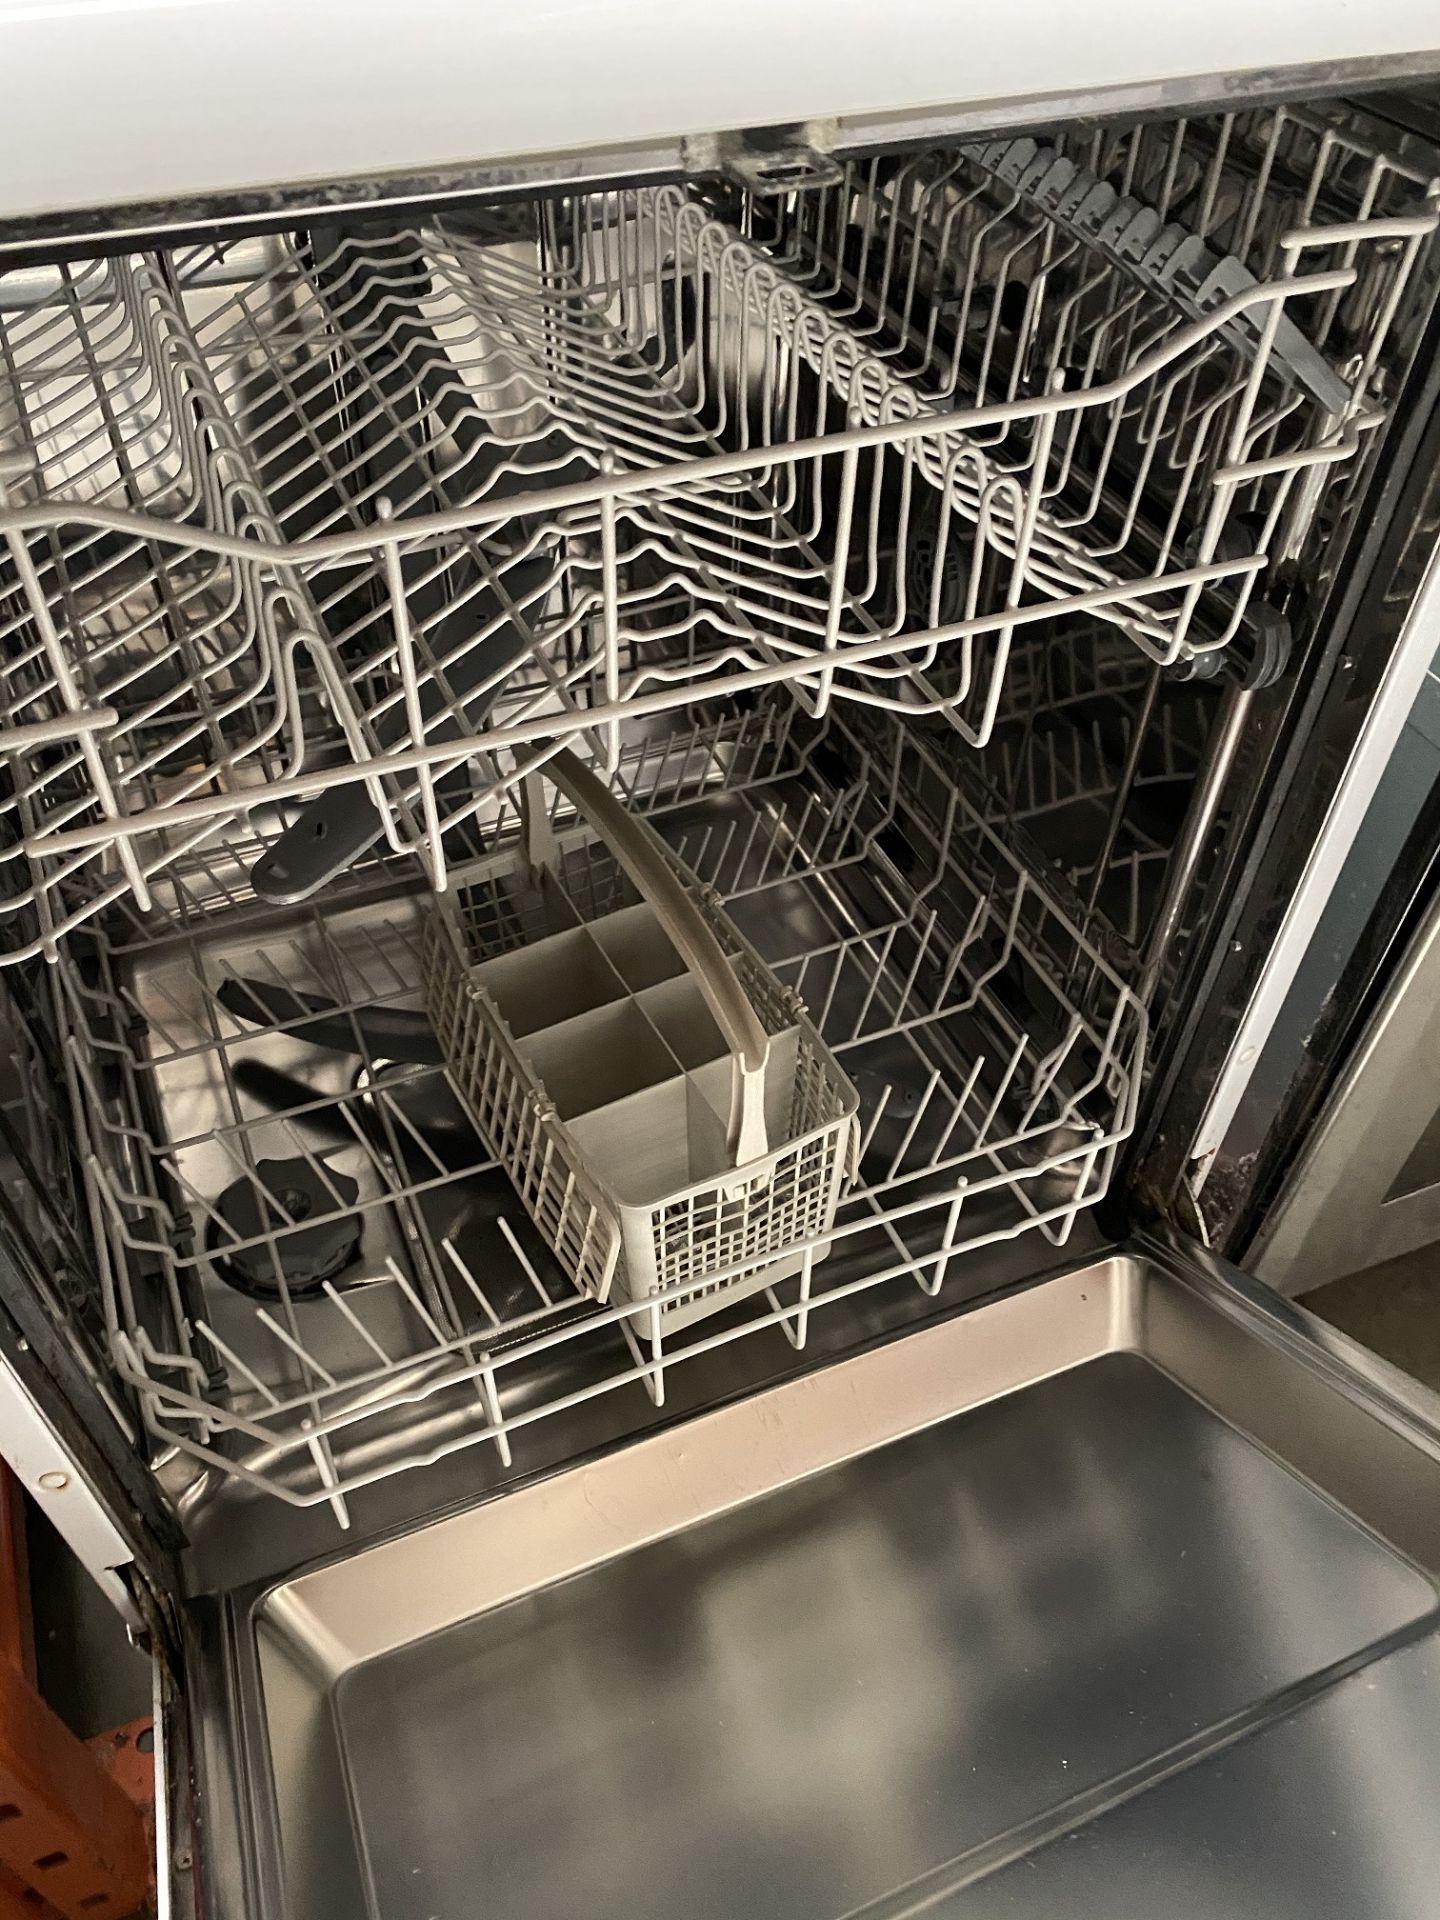 CDA Domestic Dishwasher - Image 2 of 2